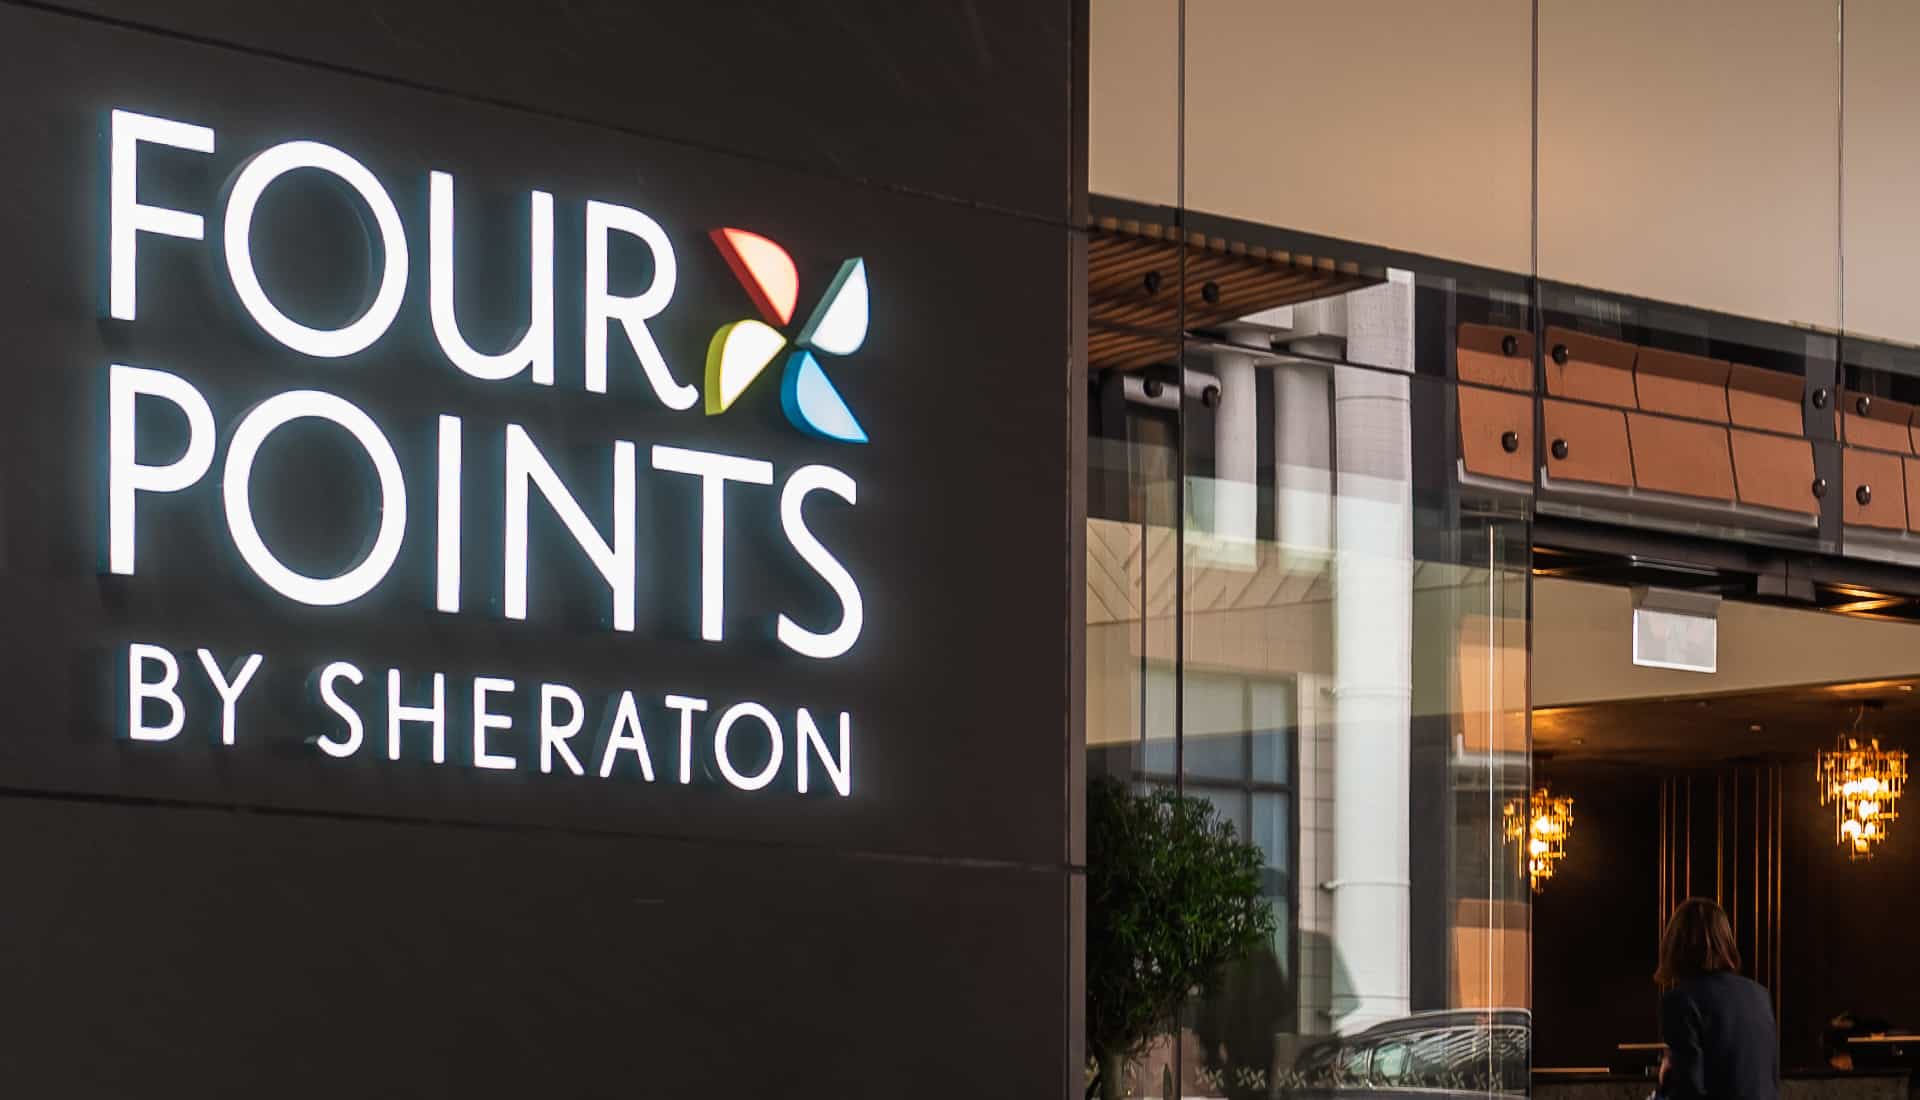 Sheraton Four Points hotel in Auckland Porte-cochère entrance sign design